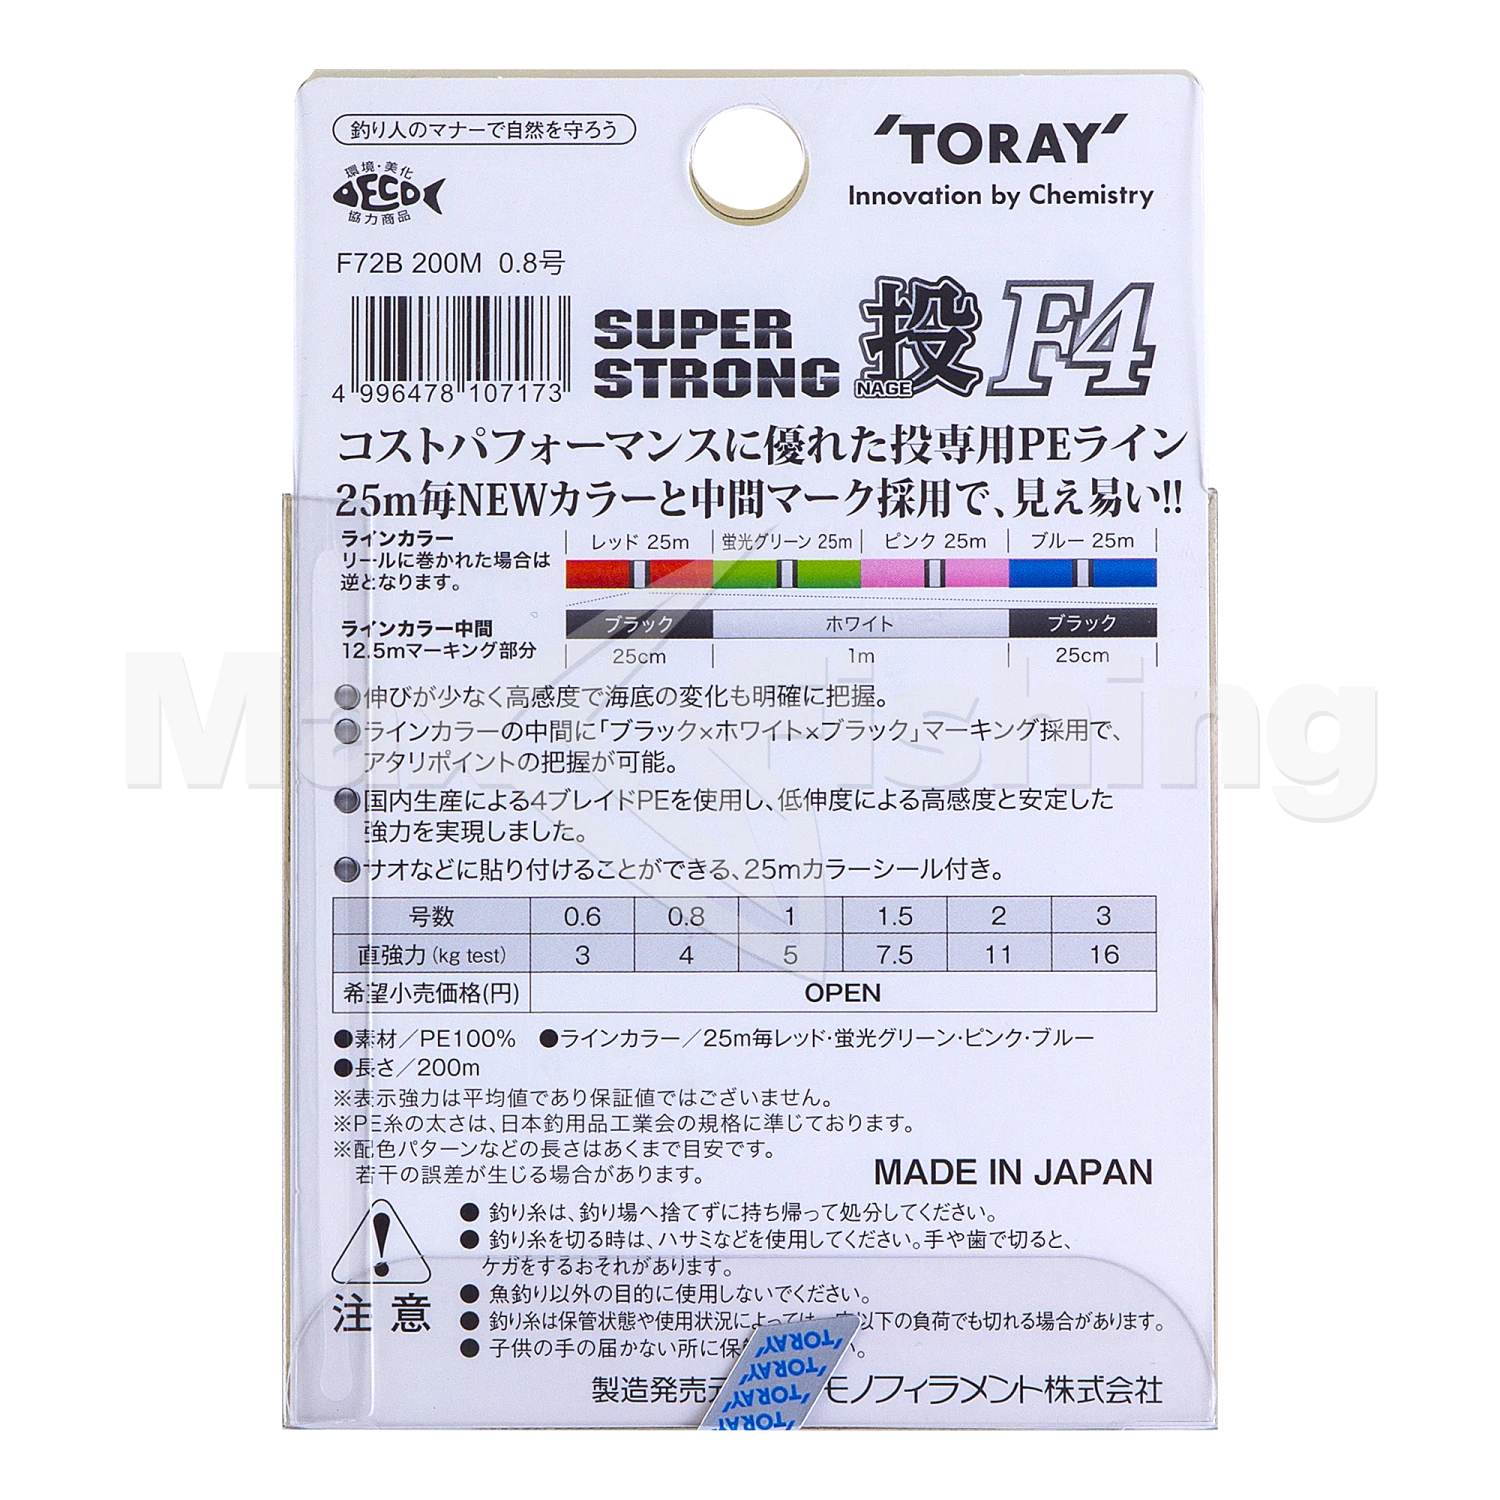 Шнур плетеный Toray Super Strong PE Nage F4 #0,8 200м (multicolor)